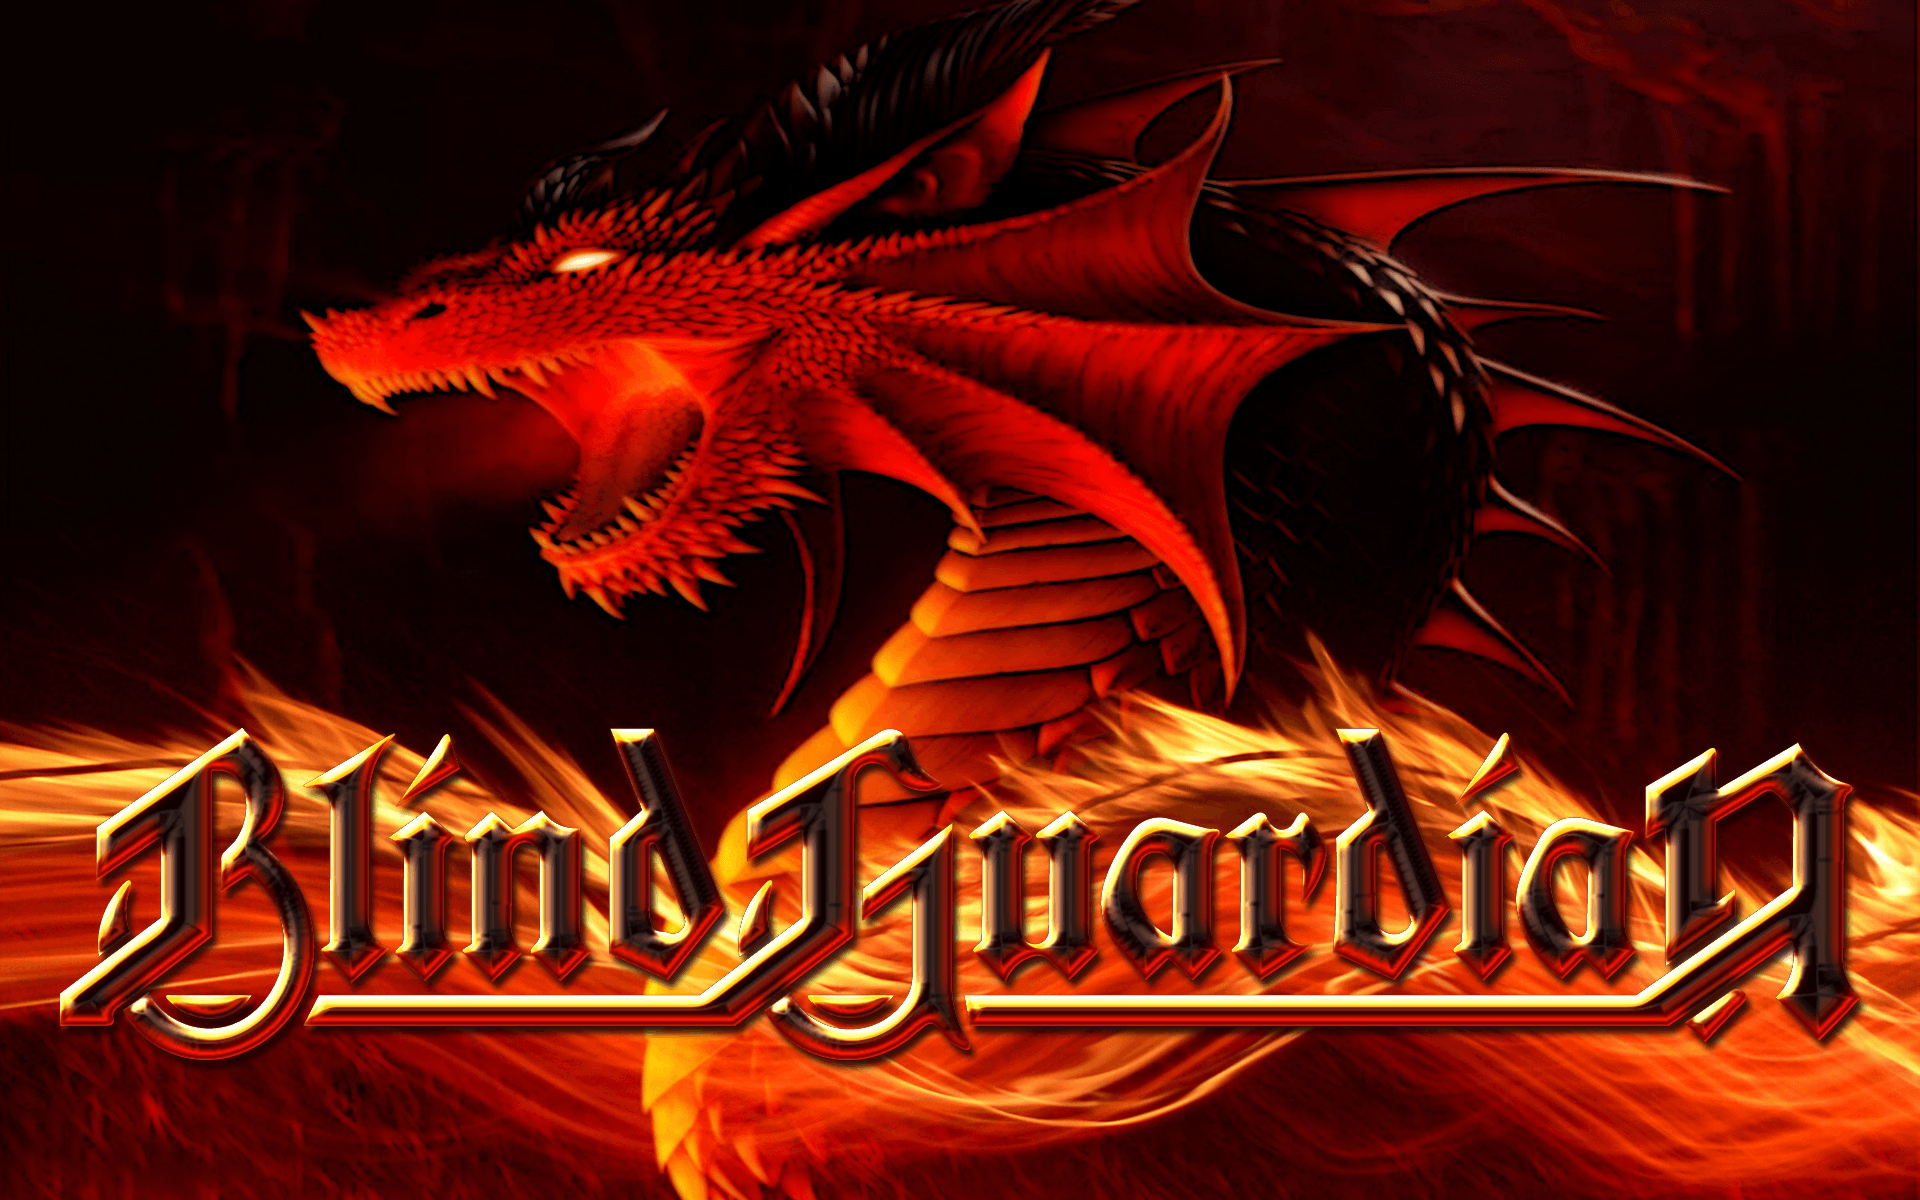 BLIND GUARDIAN heavy metal album cover fantasy dragon dragons f